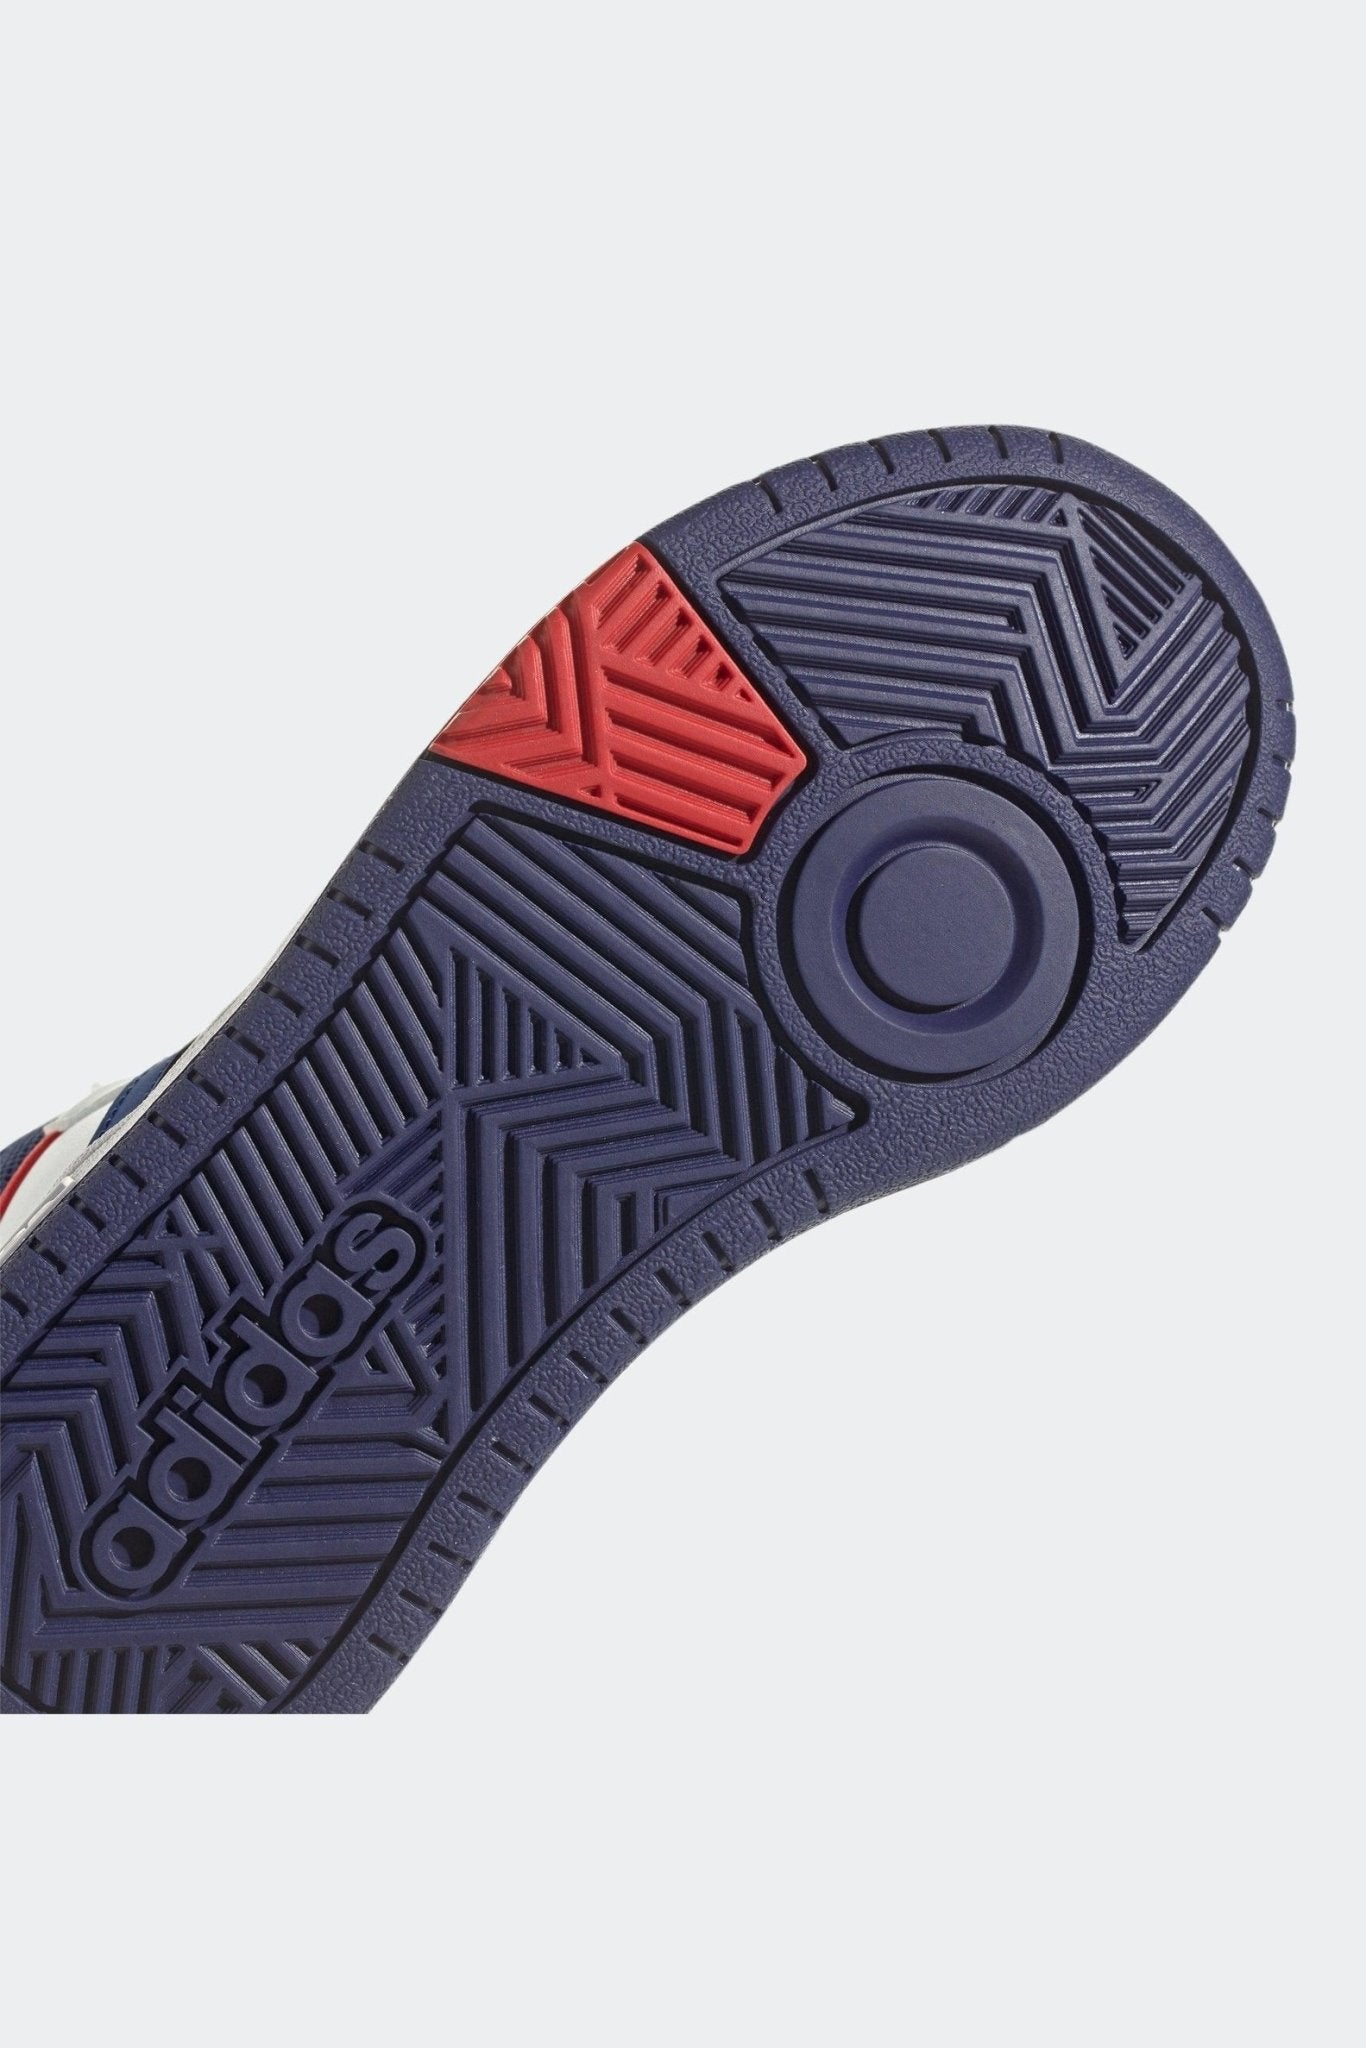 ADIDAS - נעלי כדורסל לנוער HOOPS MID 3.0 בצבע לבן וכחול - MASHBIR//365